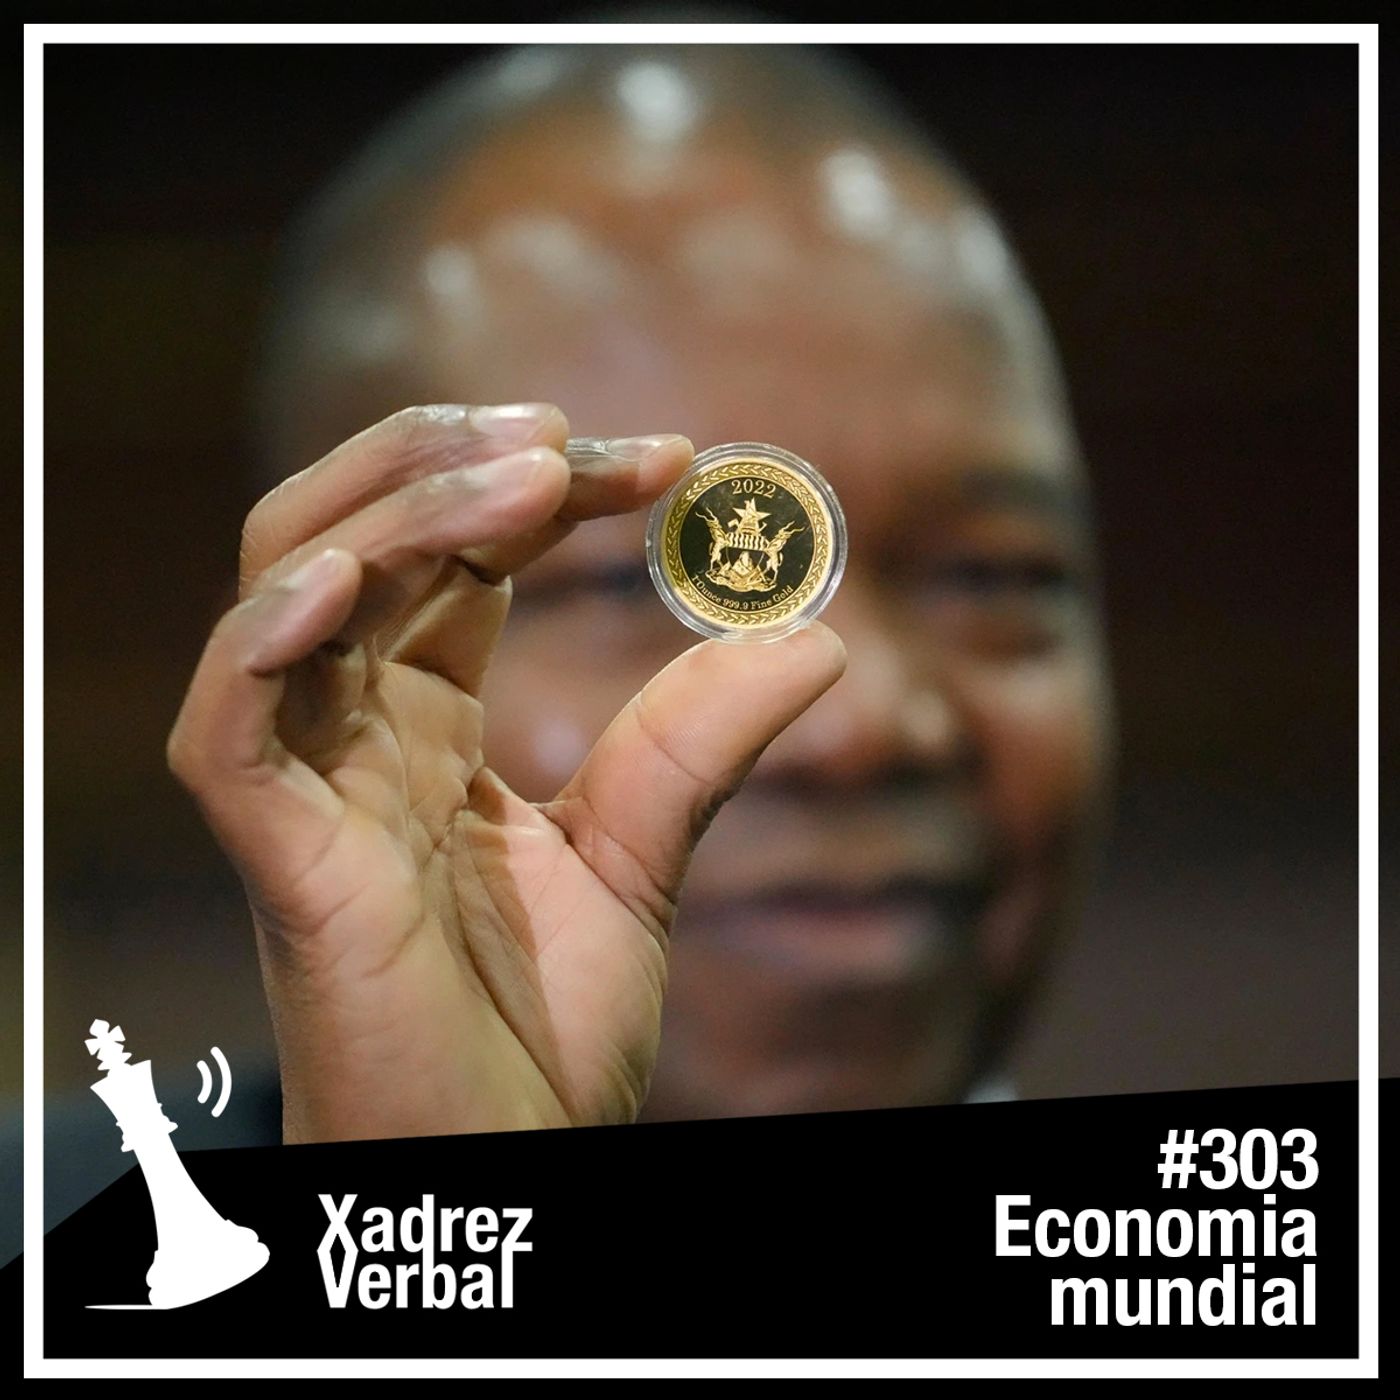 Xadrez Verbal #303 Panorama da Economia Mundial